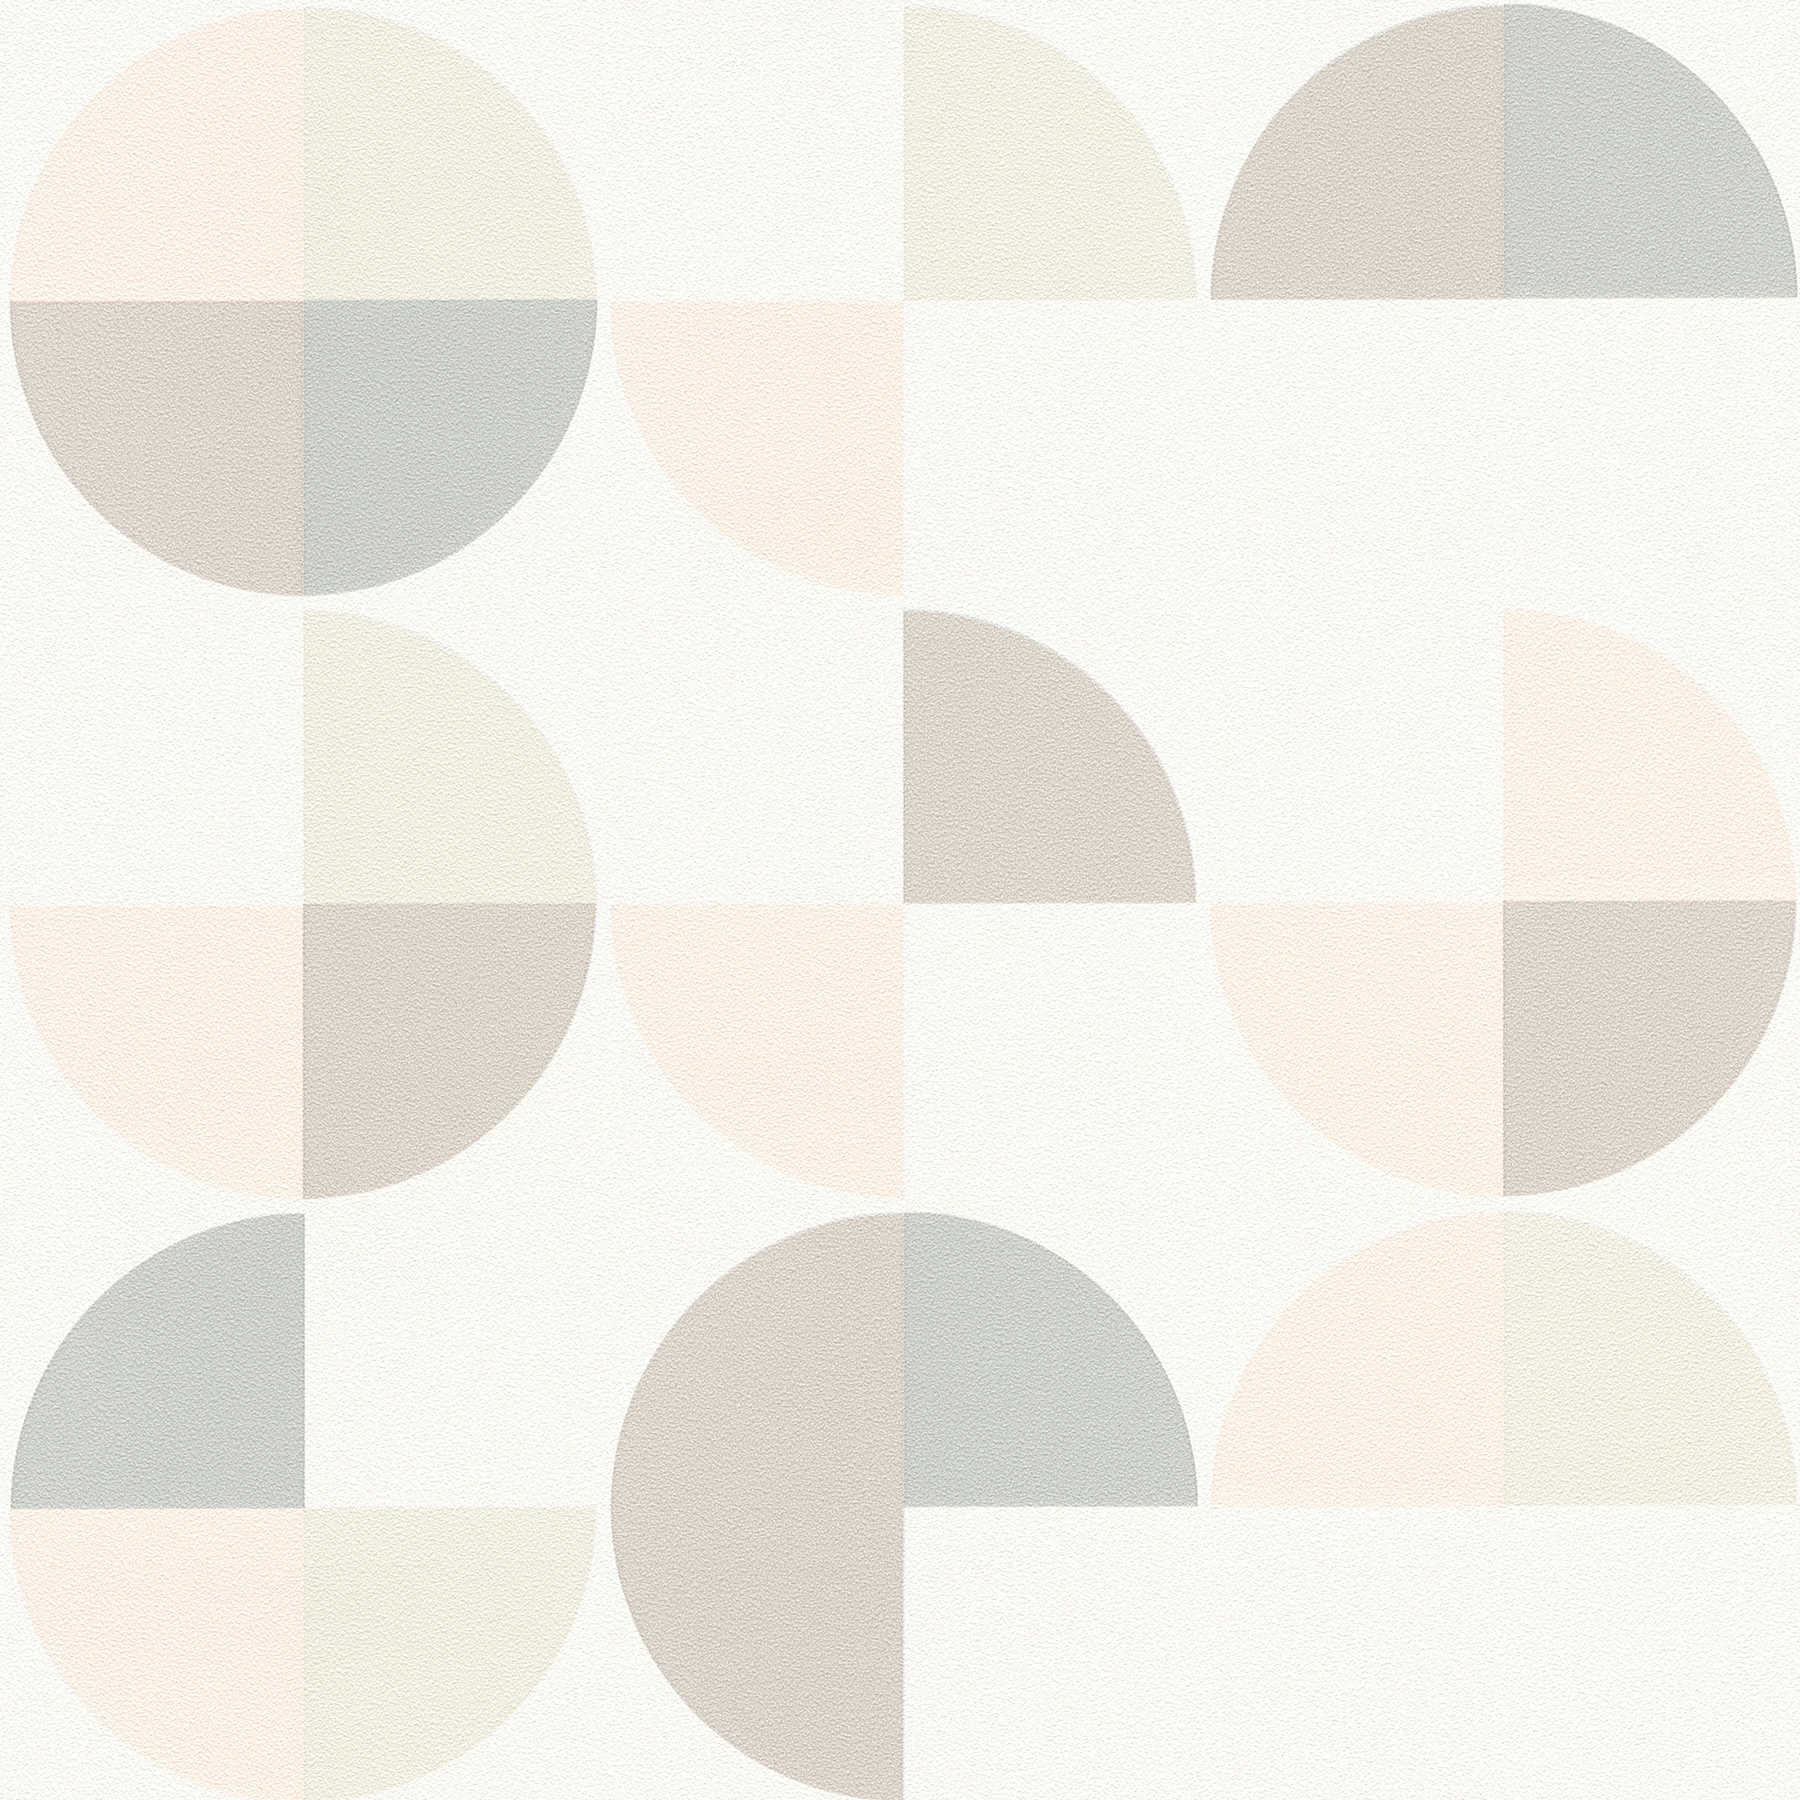 Carta da parati con motivi geometrici in stile scandinavo - grigio, rosa, beige
